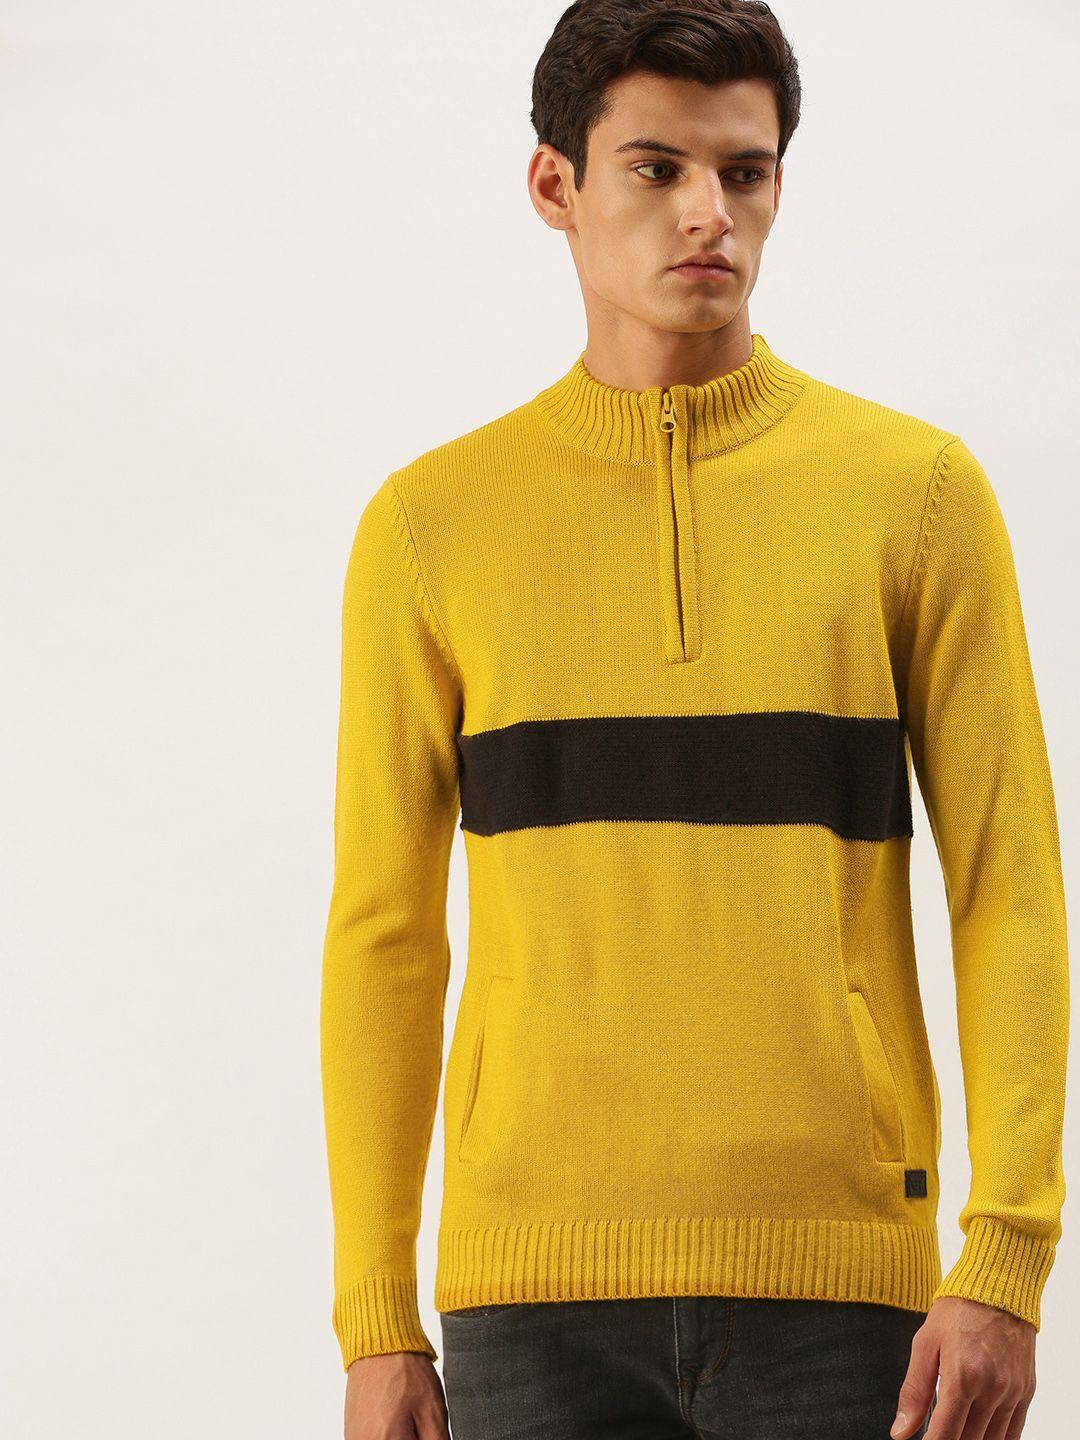 flying machine men mustard yellow & black colourblocked pullover sweater